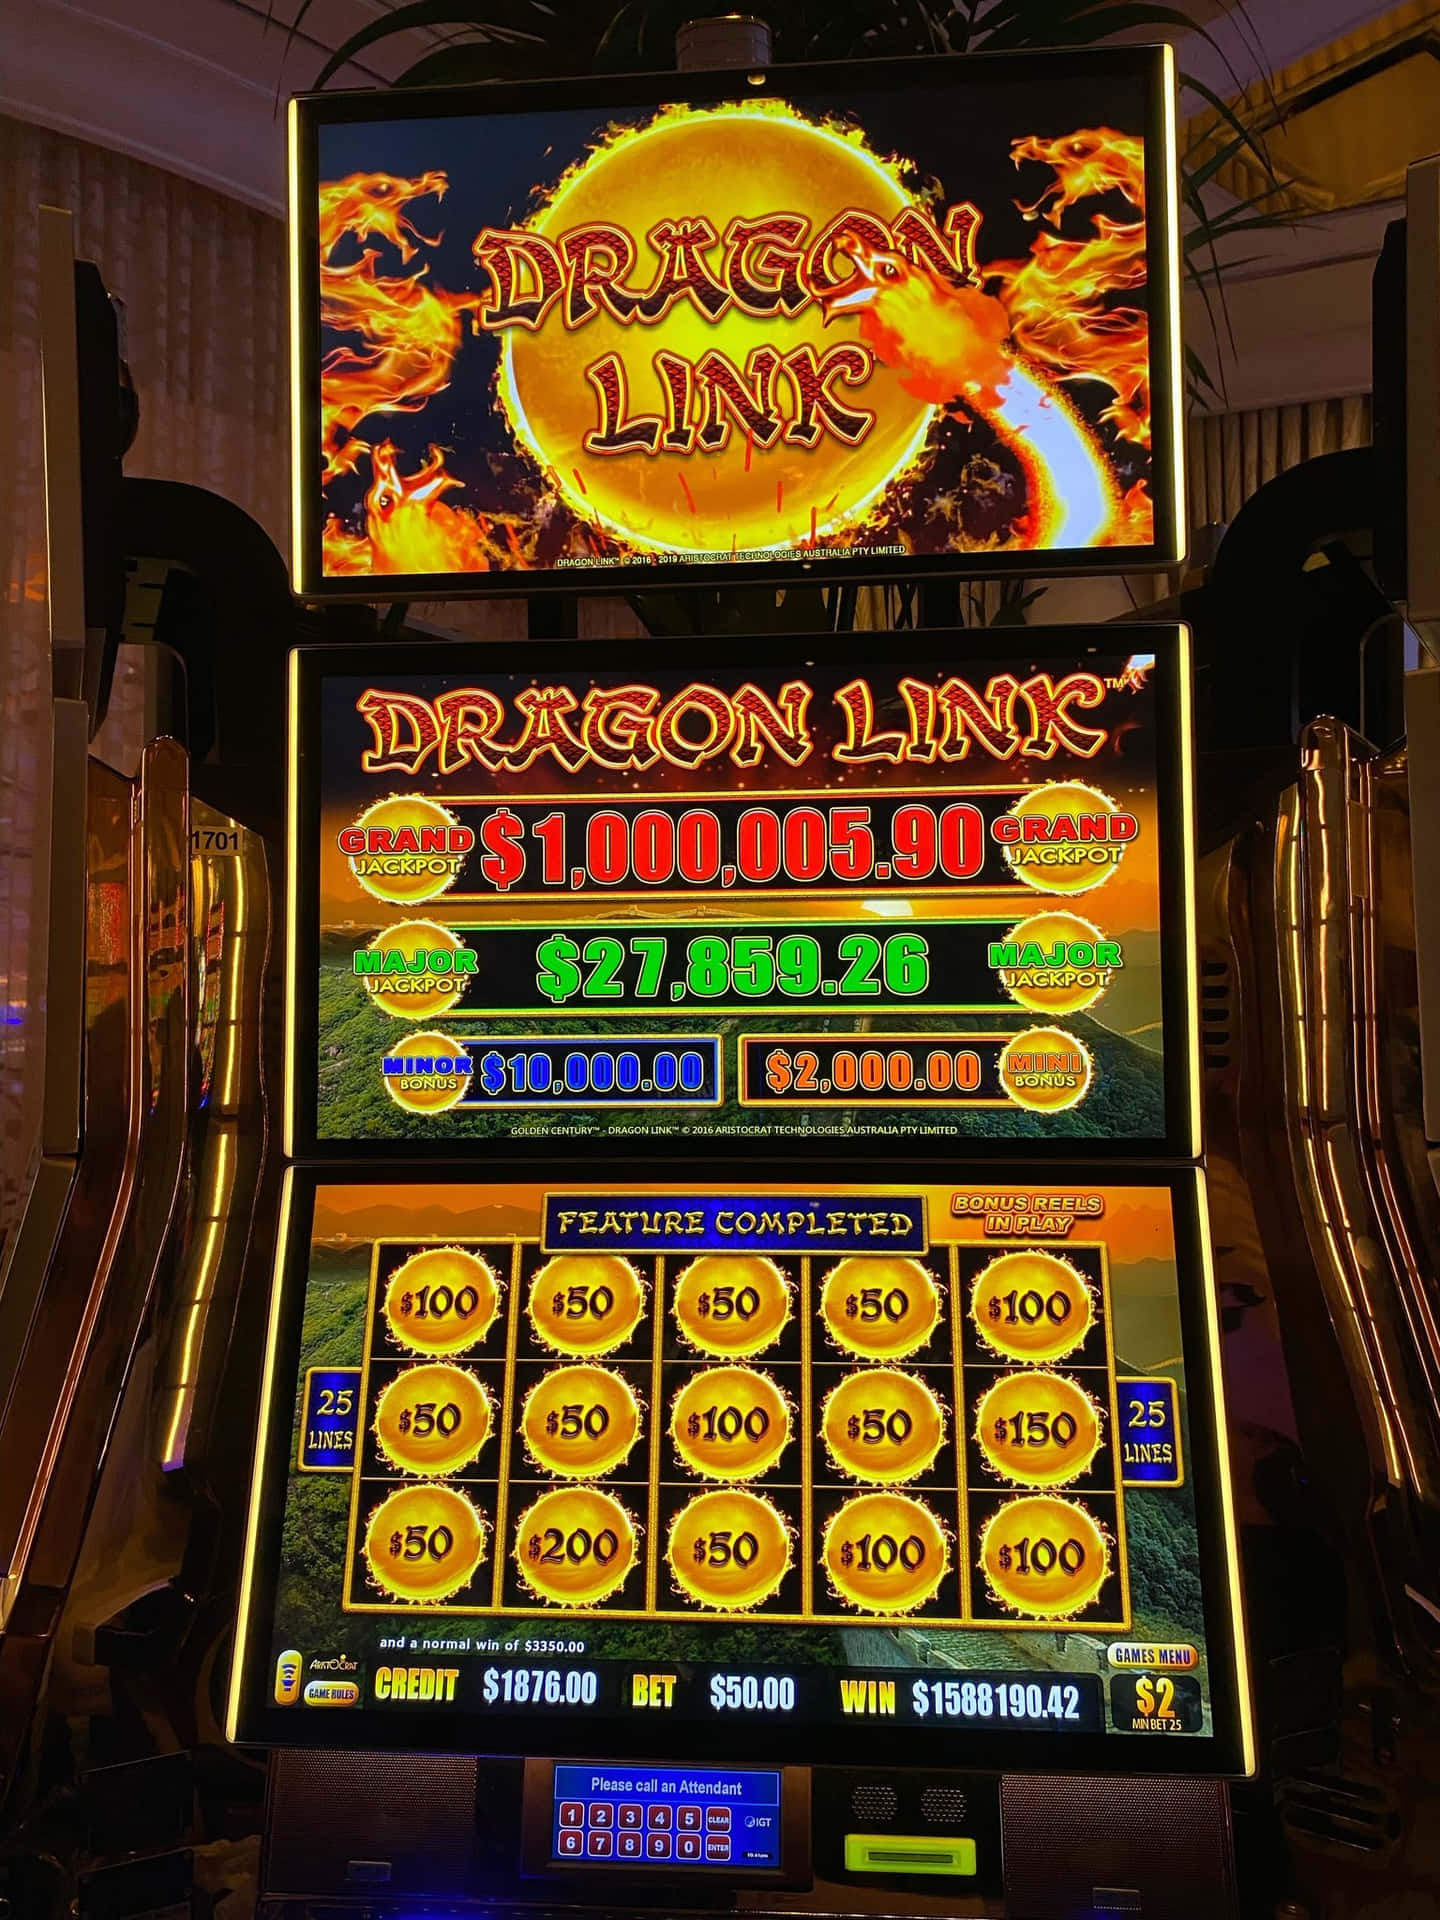 Winner - Playing a slot machine can make you a big winner!